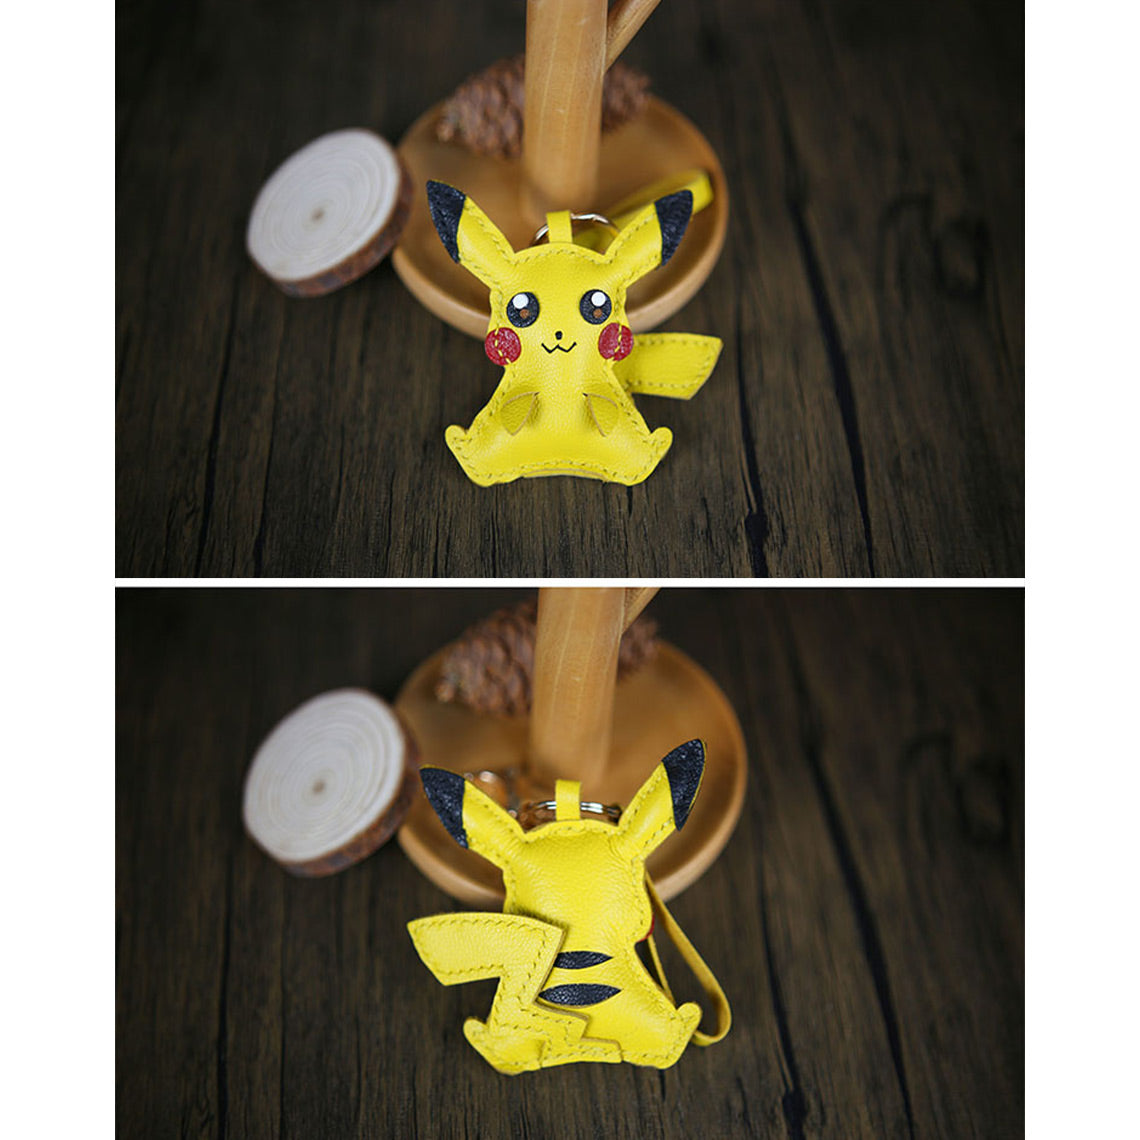 Cute DIY Pokemon Keychain Charms | DIY Leather Keychain | Sew Up a Kawaii Keychain at Home